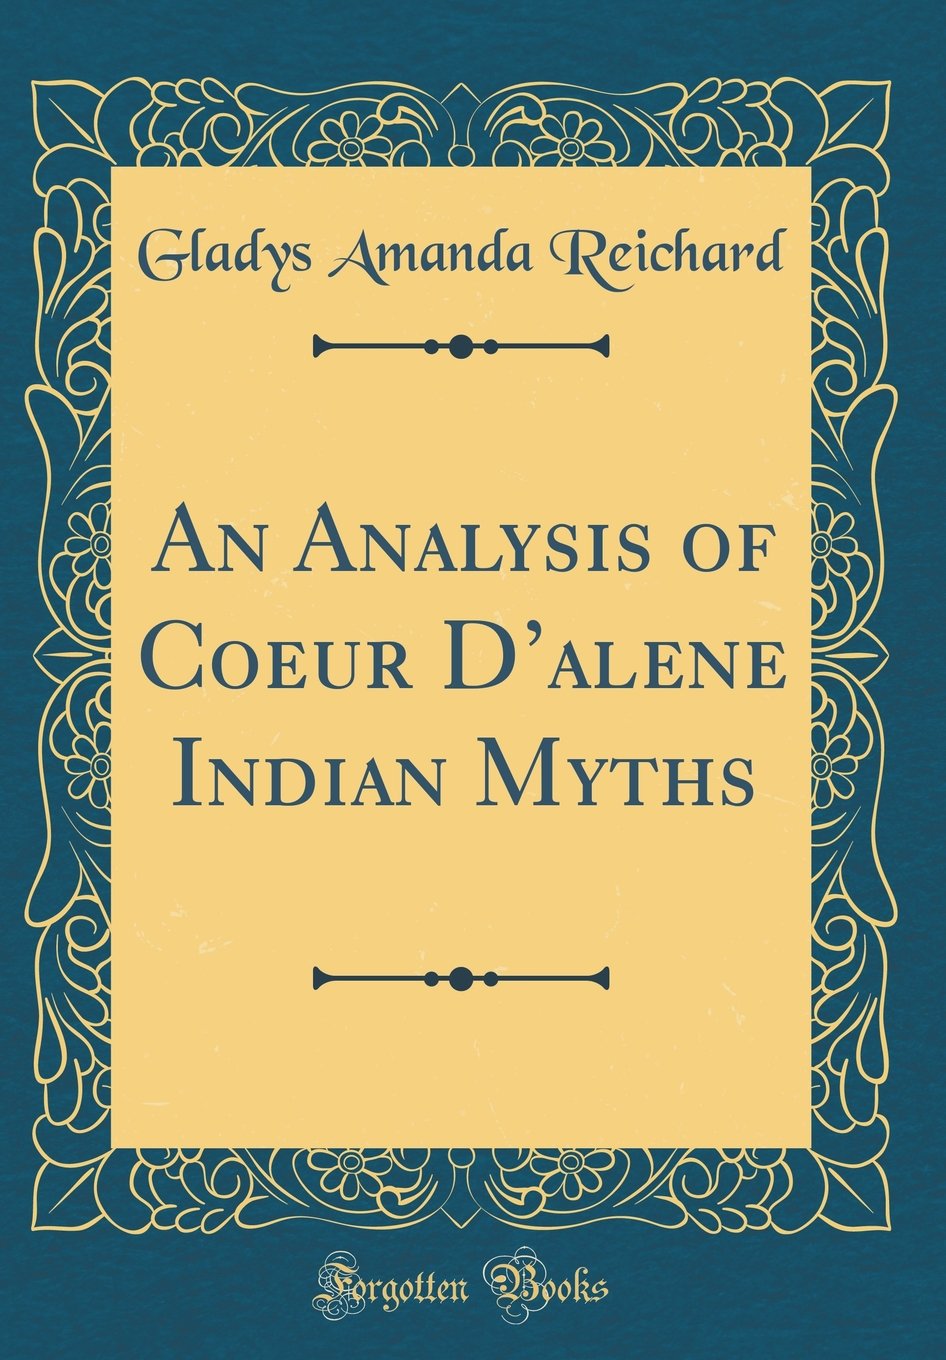 An analysis of Coeur d'Alene Indian myths (book cover)